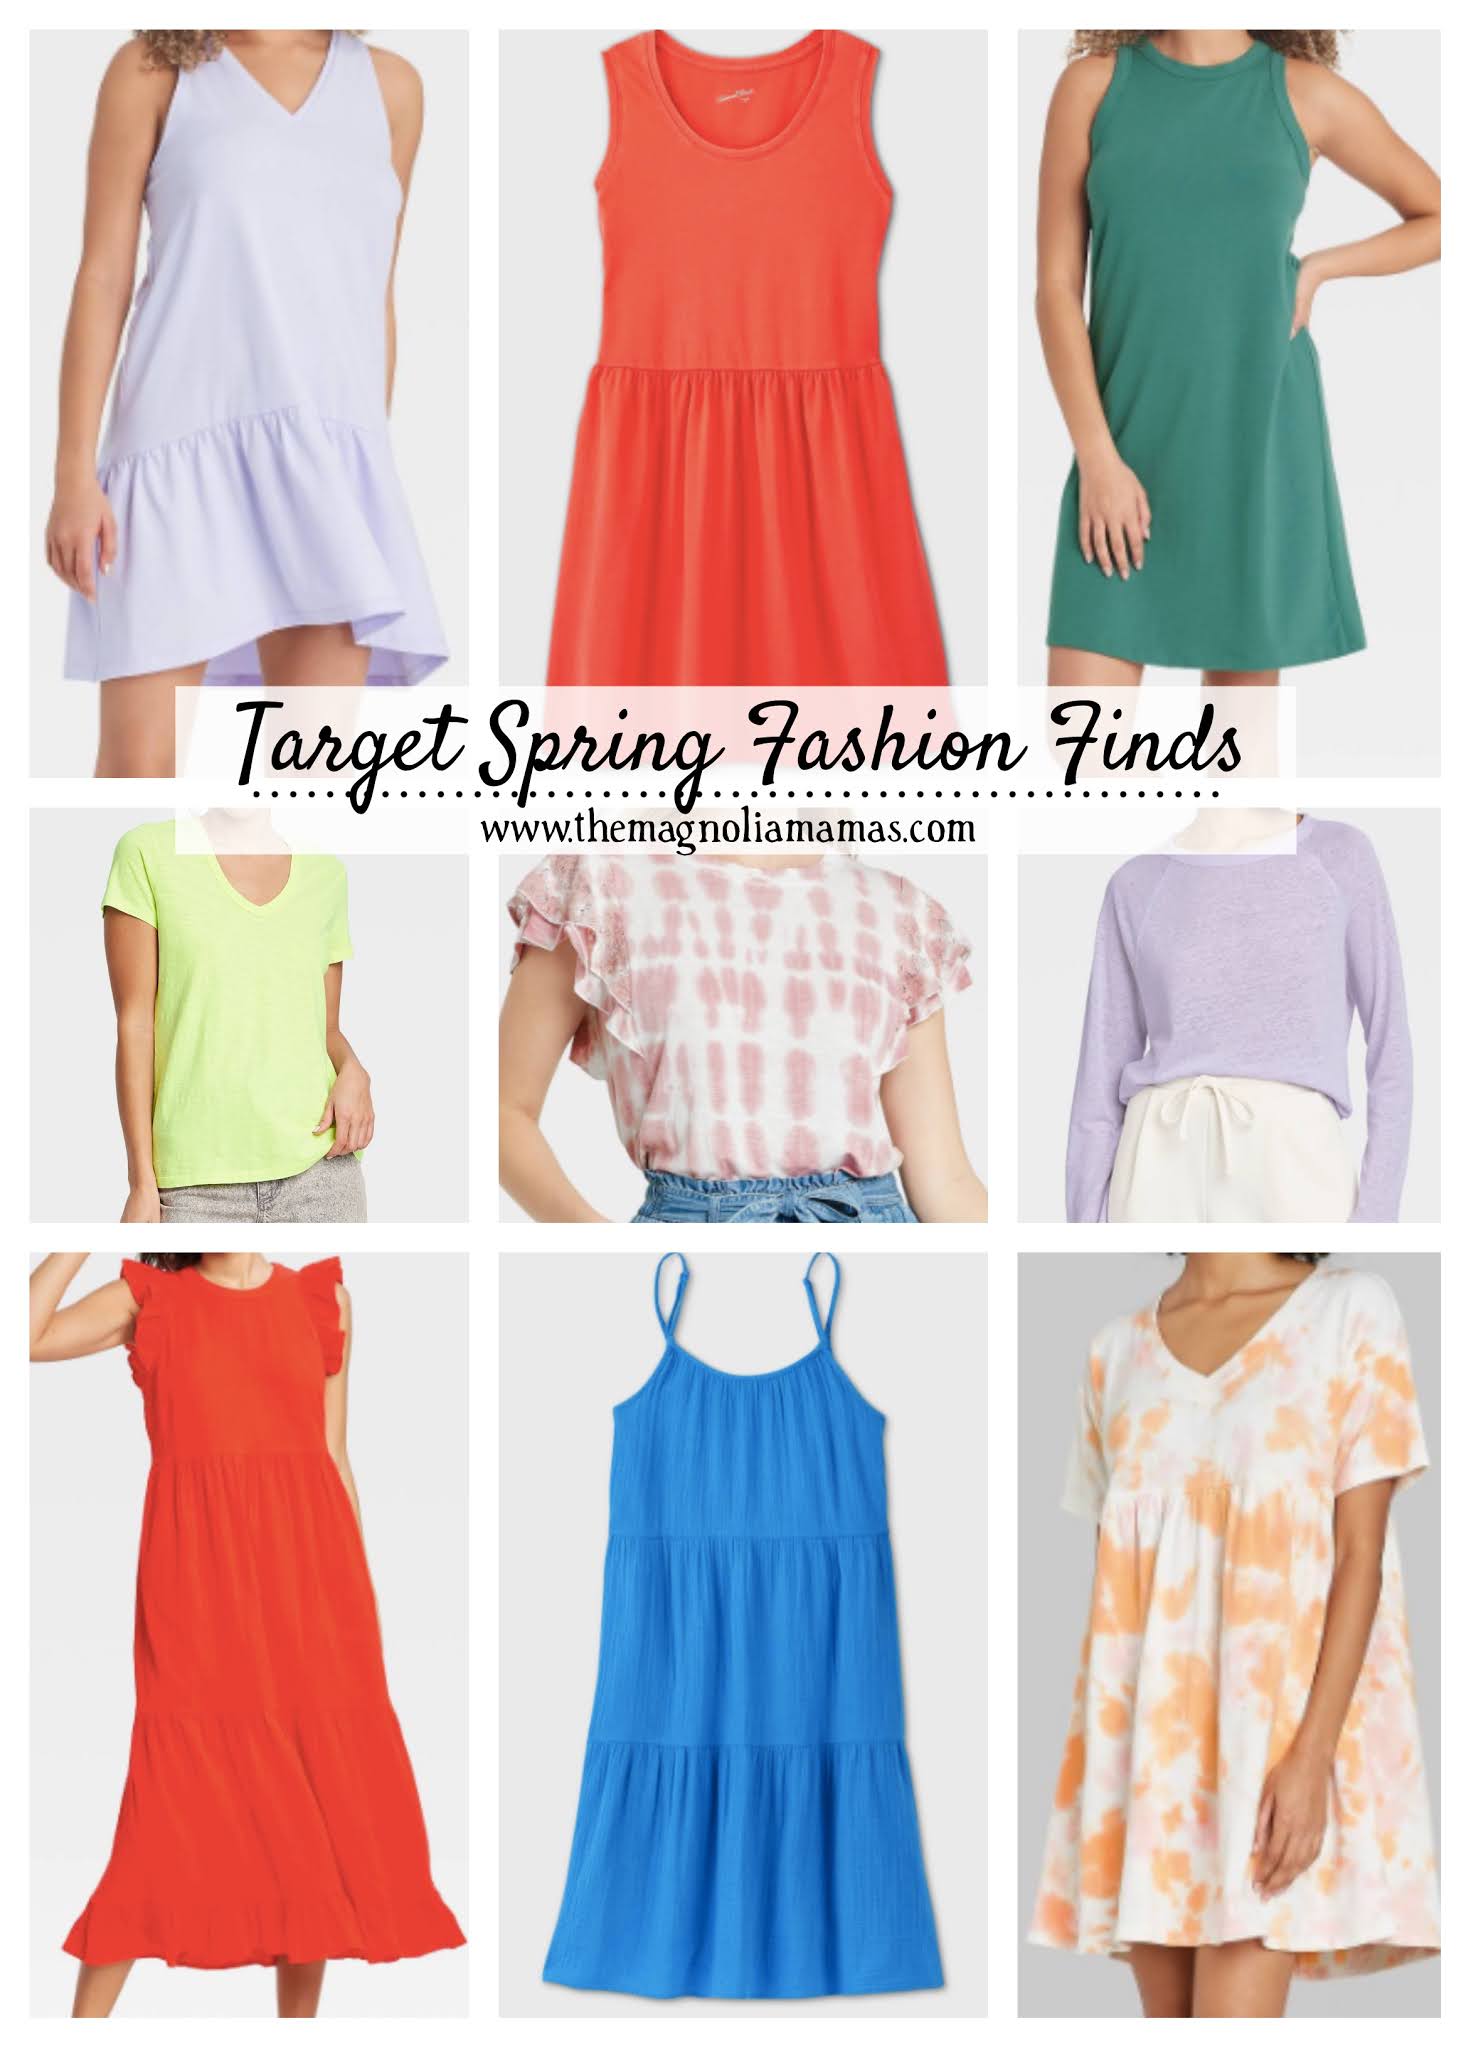 Magnolia Mamas : Target Spring Fashion Finds